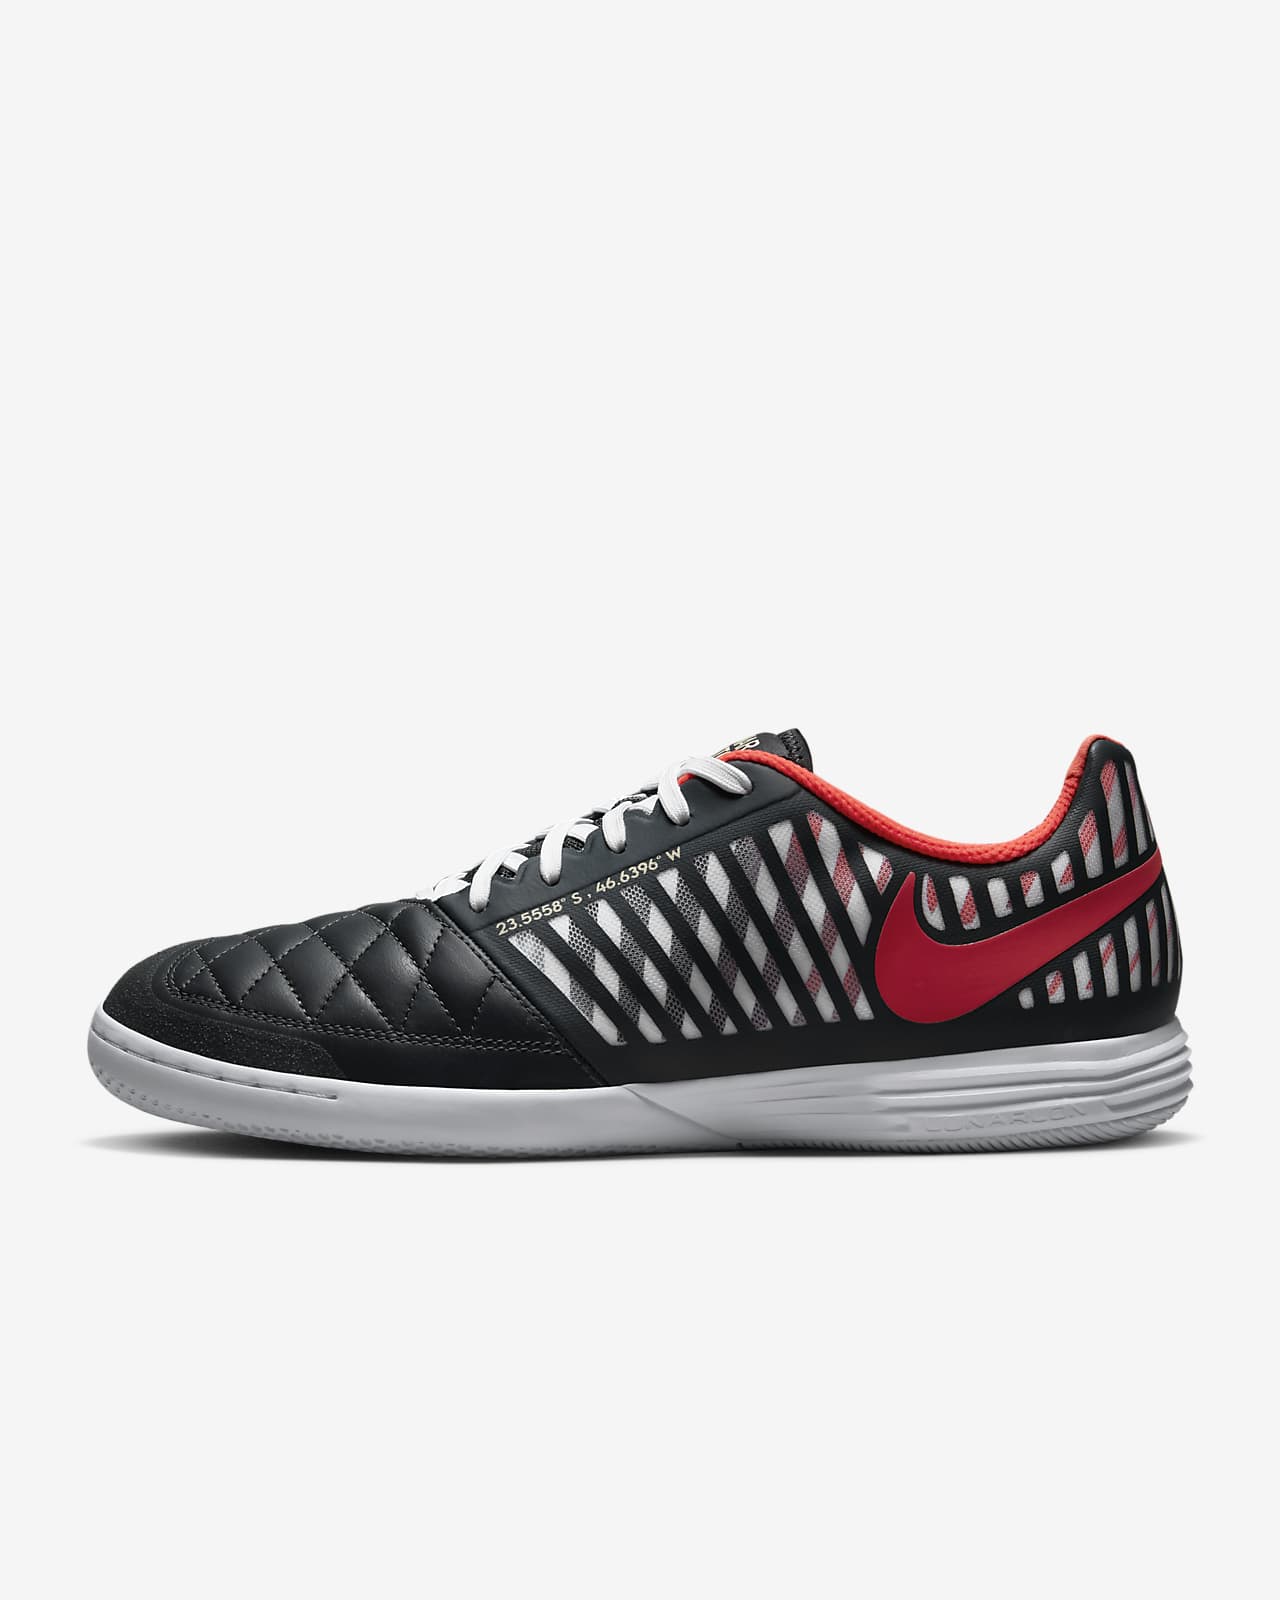 Nike Lunar Gato II Indoor Court Low-Top Football Shoes